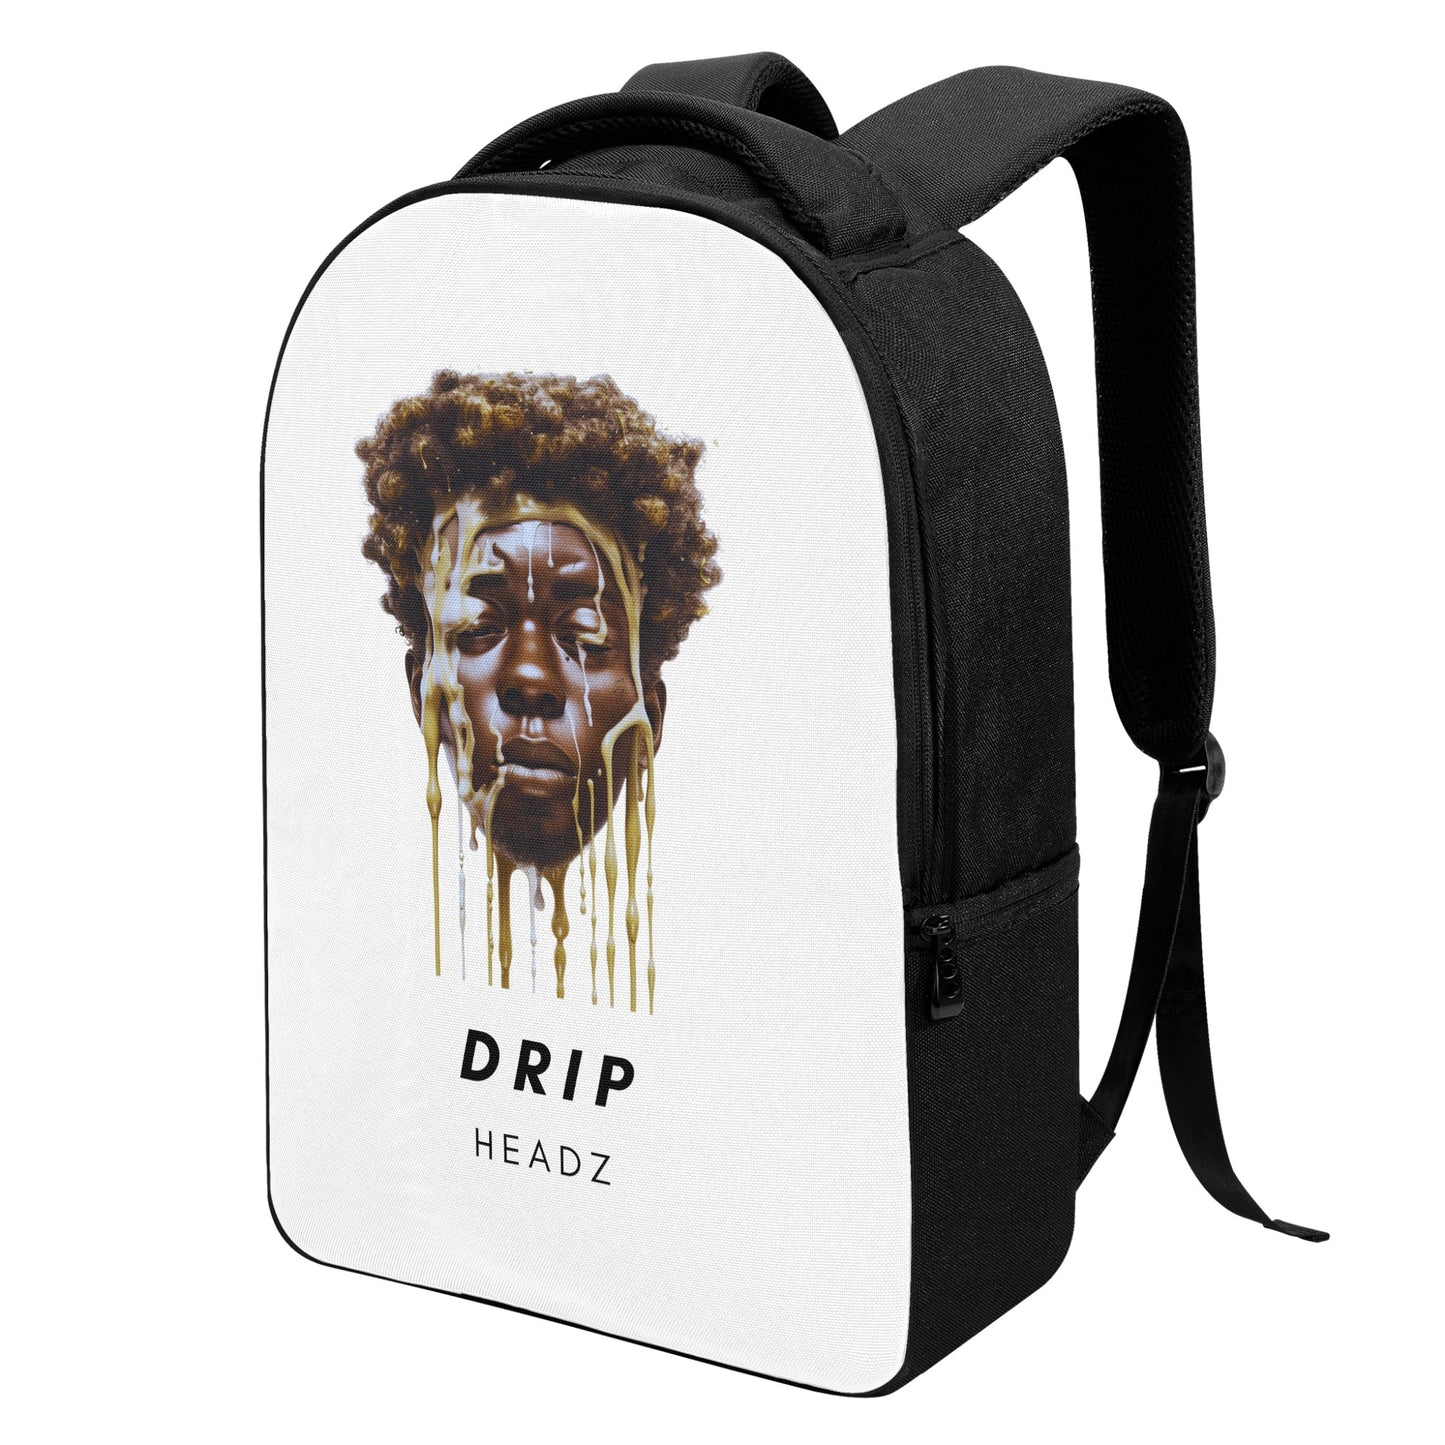 Drip Headz Ballie (backpack)